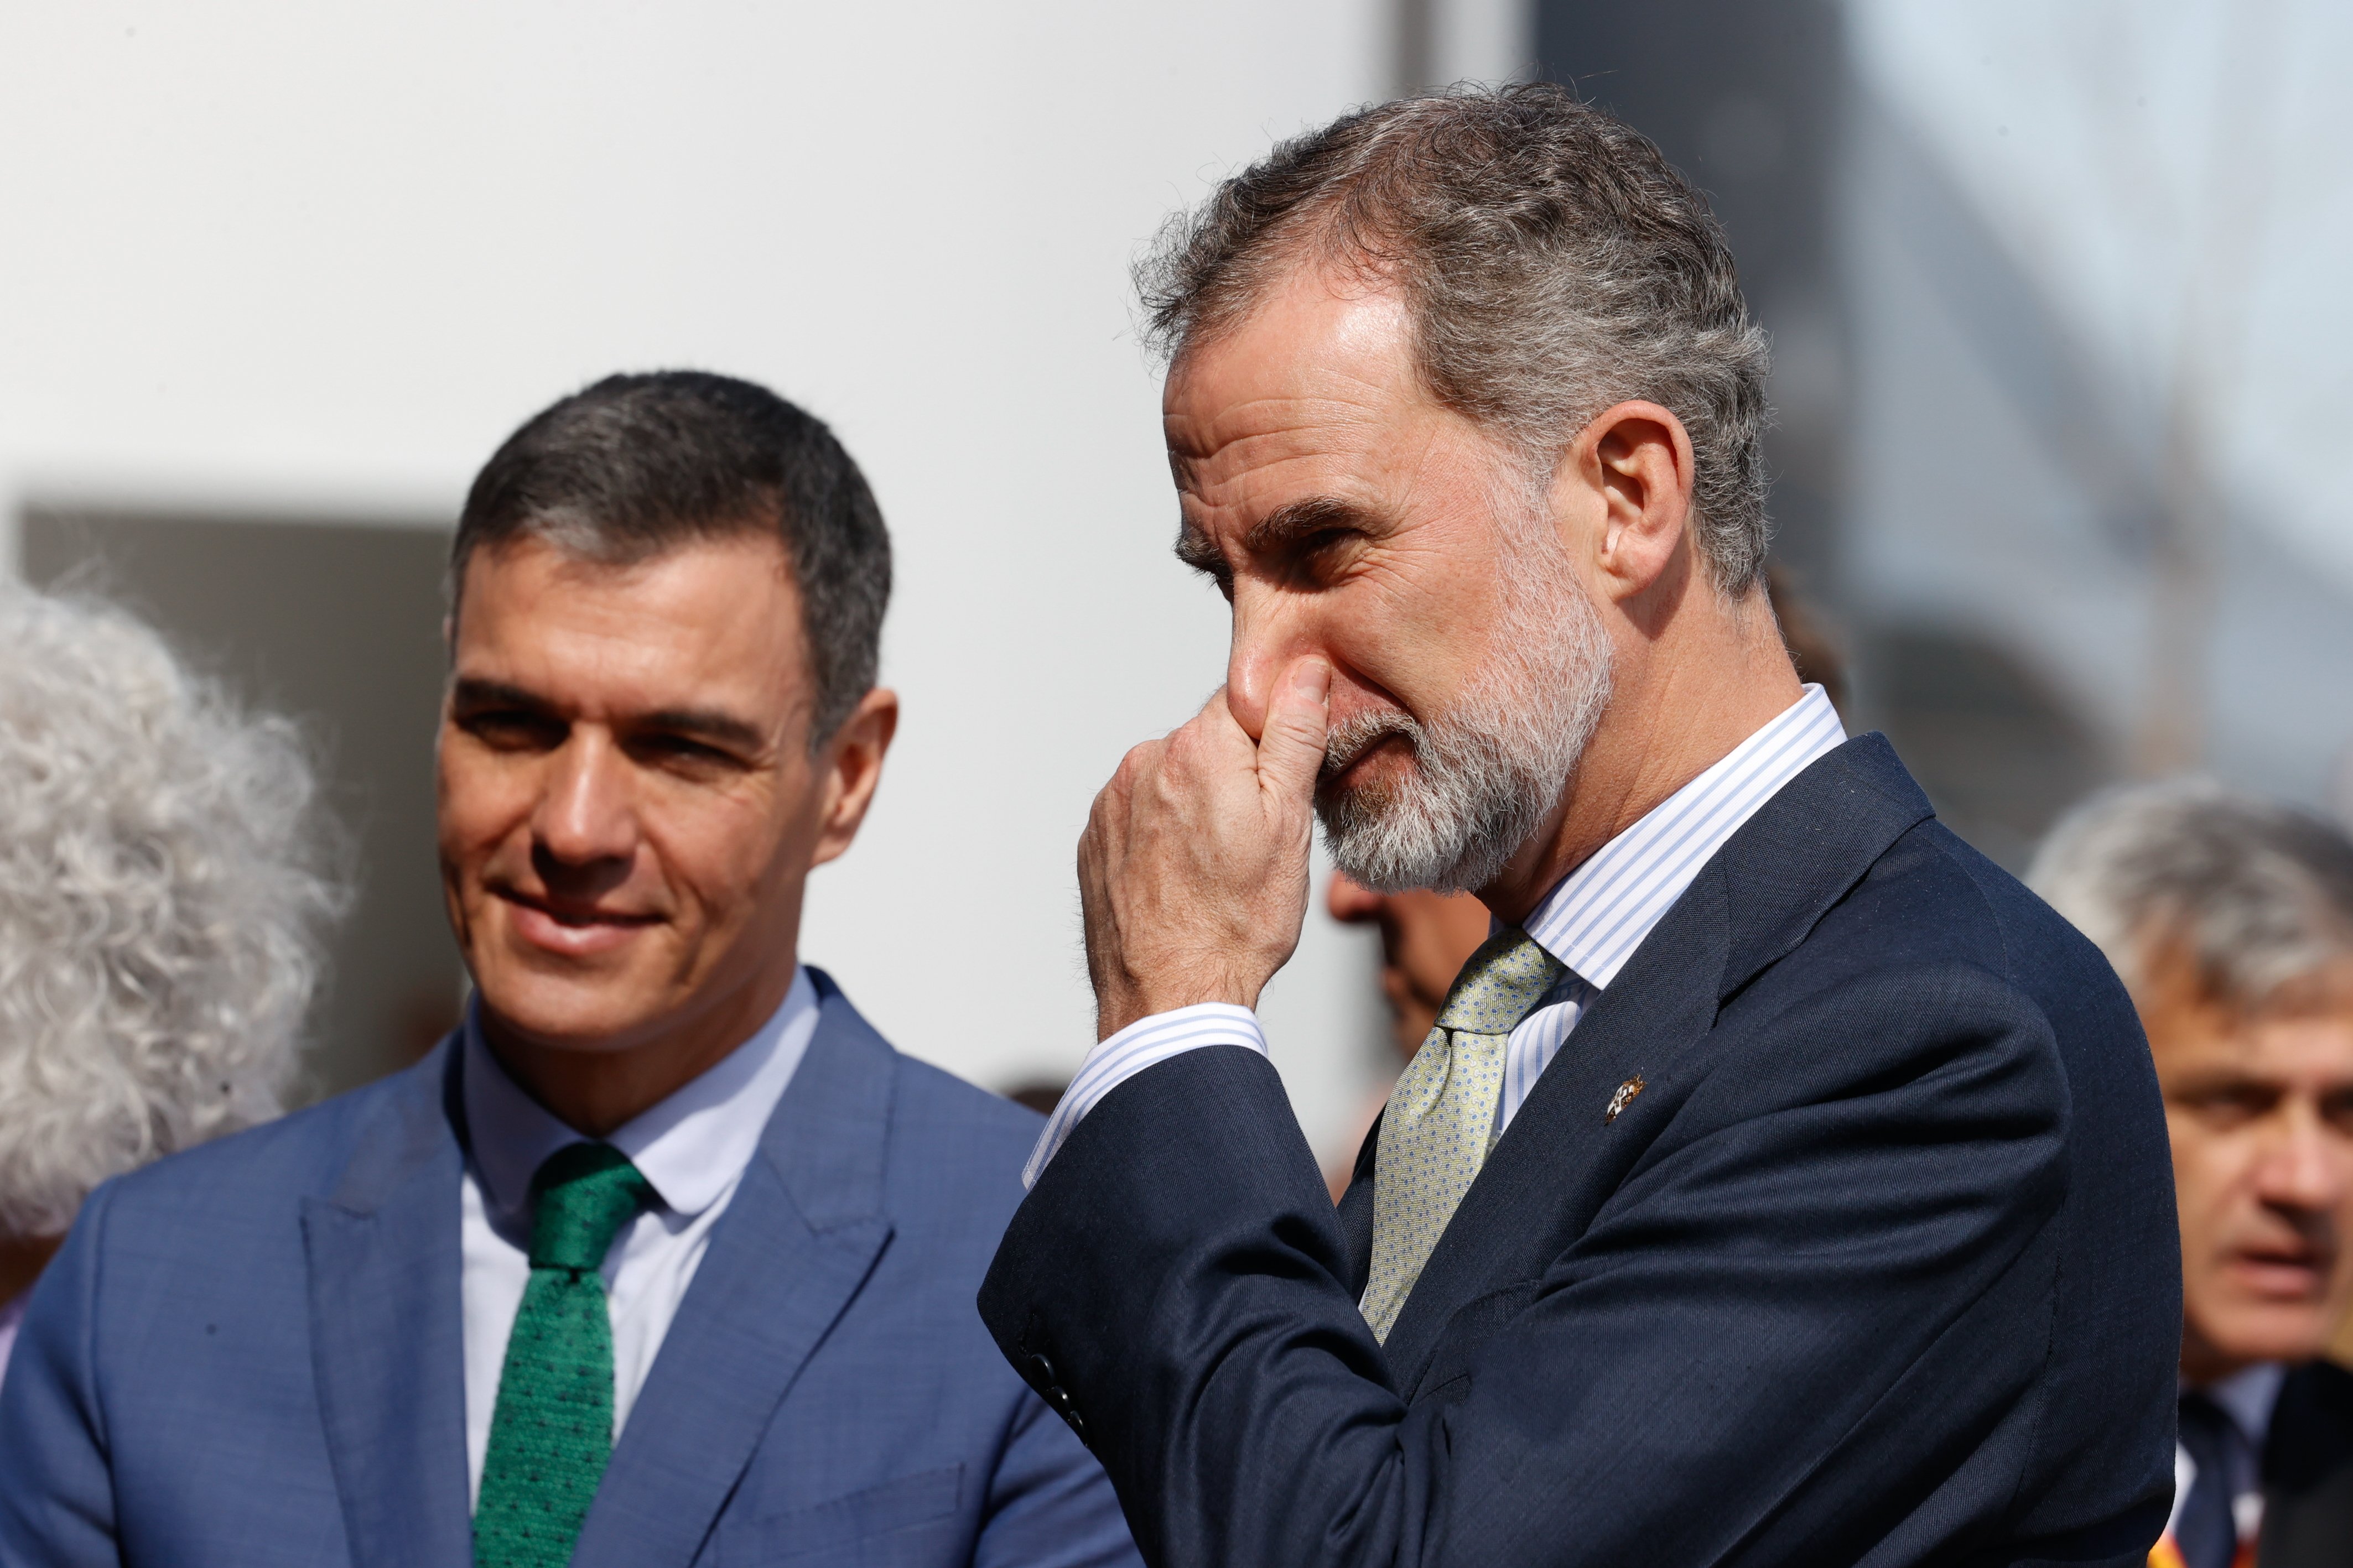 Felip VI i Pedro Sánchez, vergonya a l'AVE, no se suporten